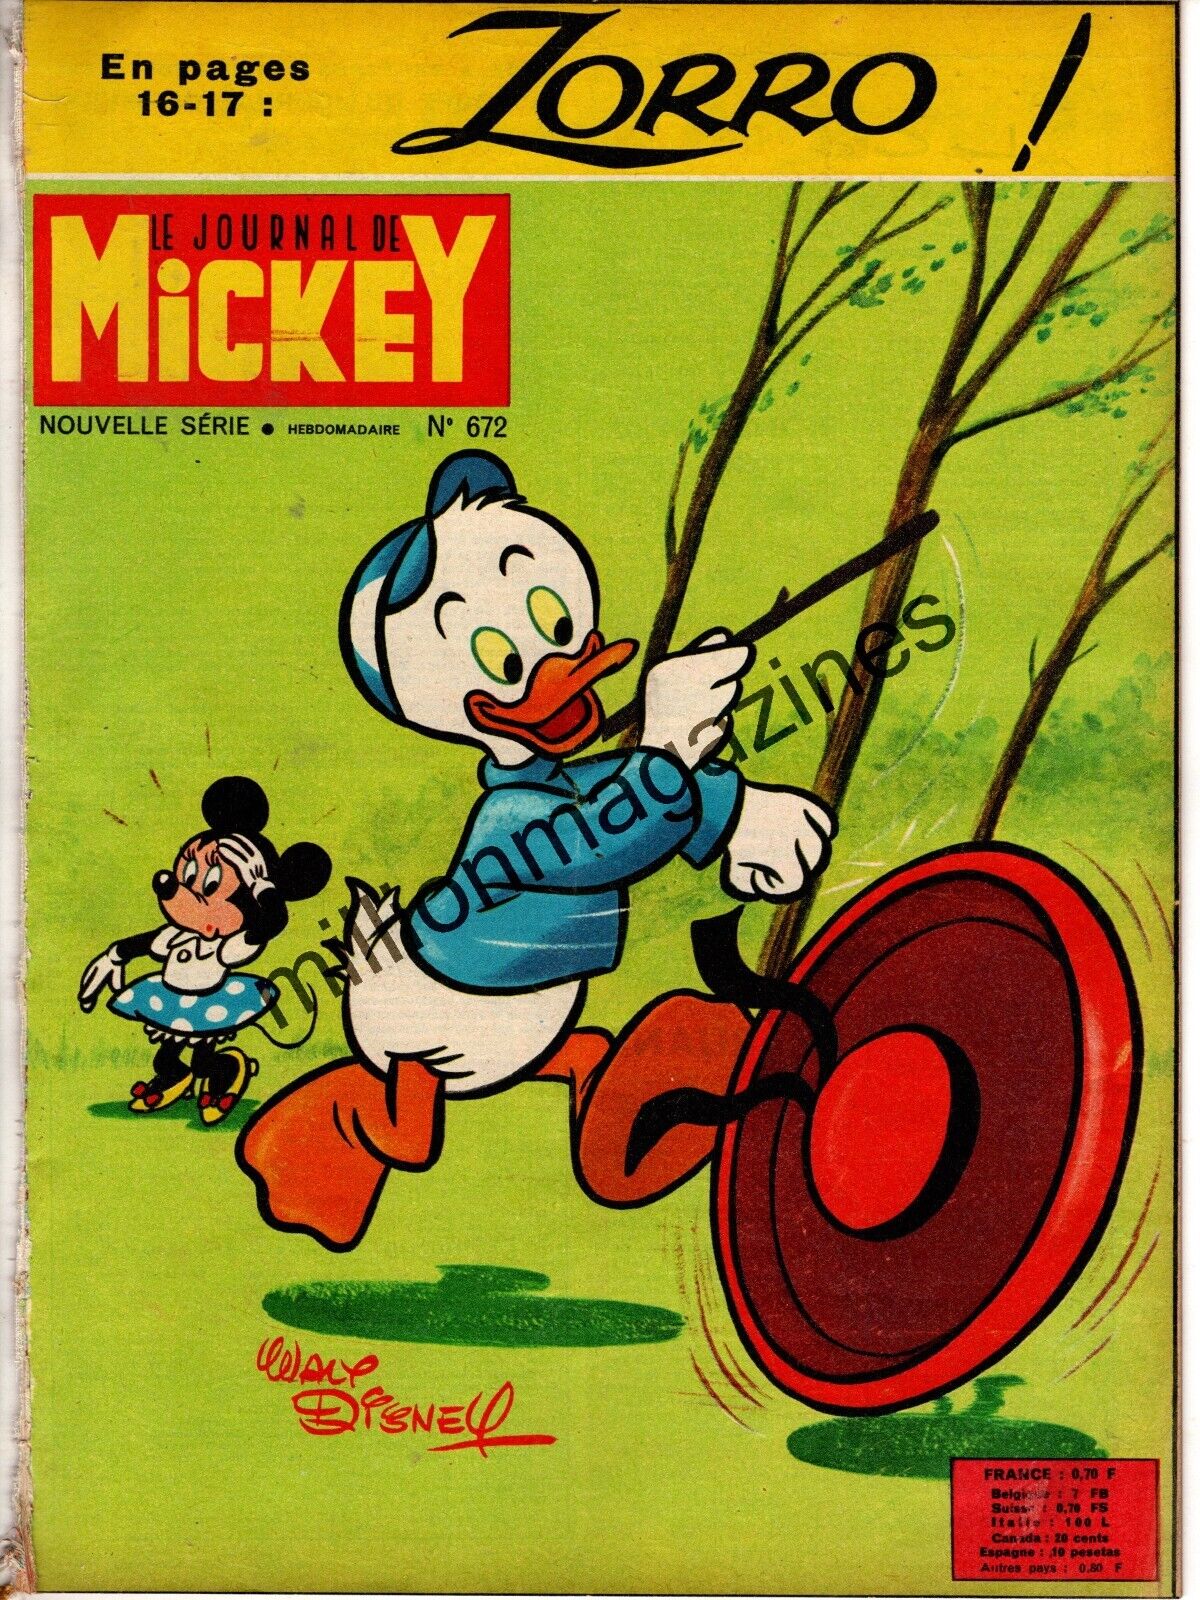 1965 Journal de Mickey Comic Magazine #672 - Goofy; Uncle Scrooge; Mortimer